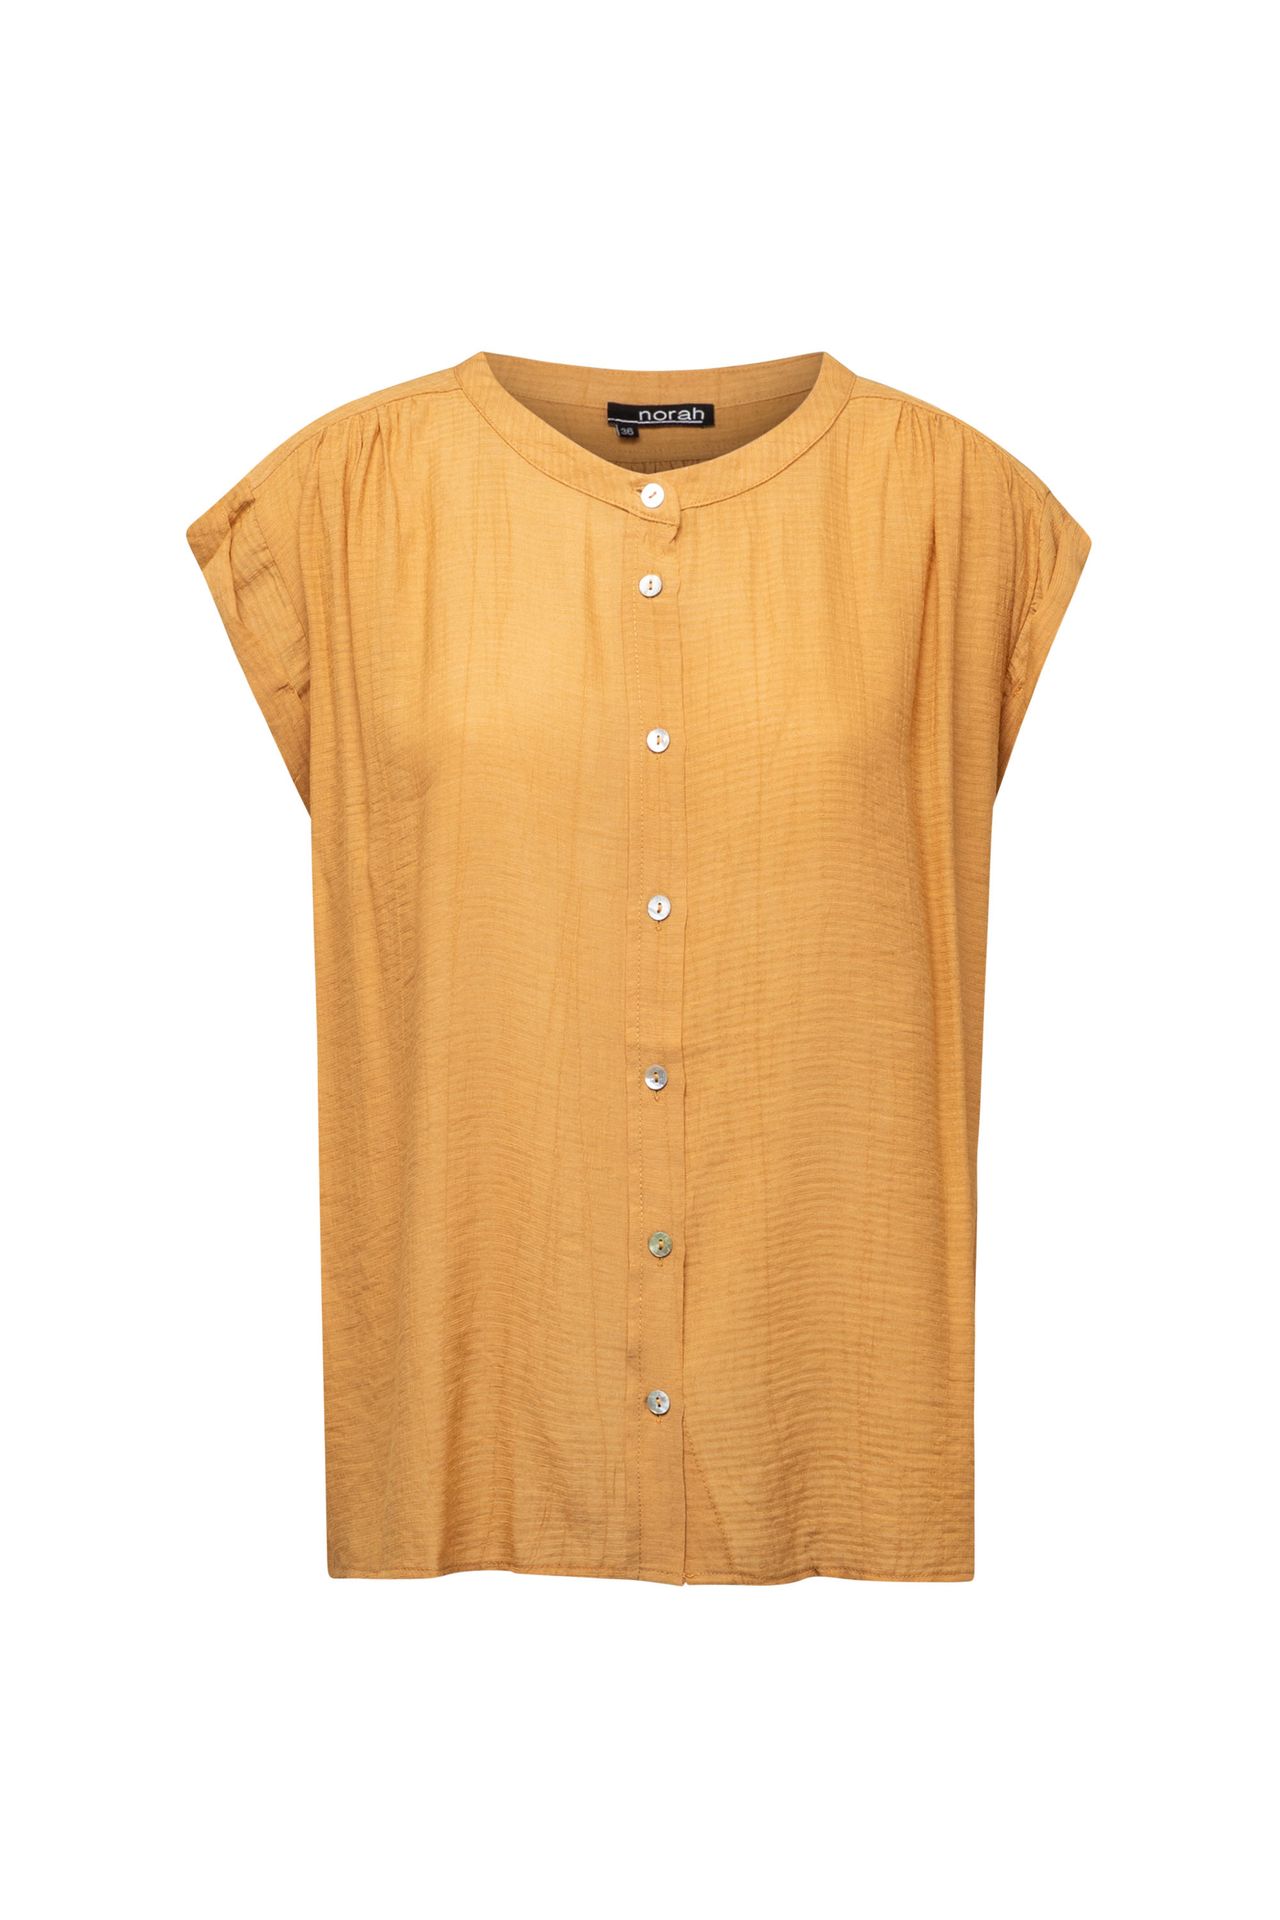 Norah Gele blouse met kapmouwen curry 213675-371